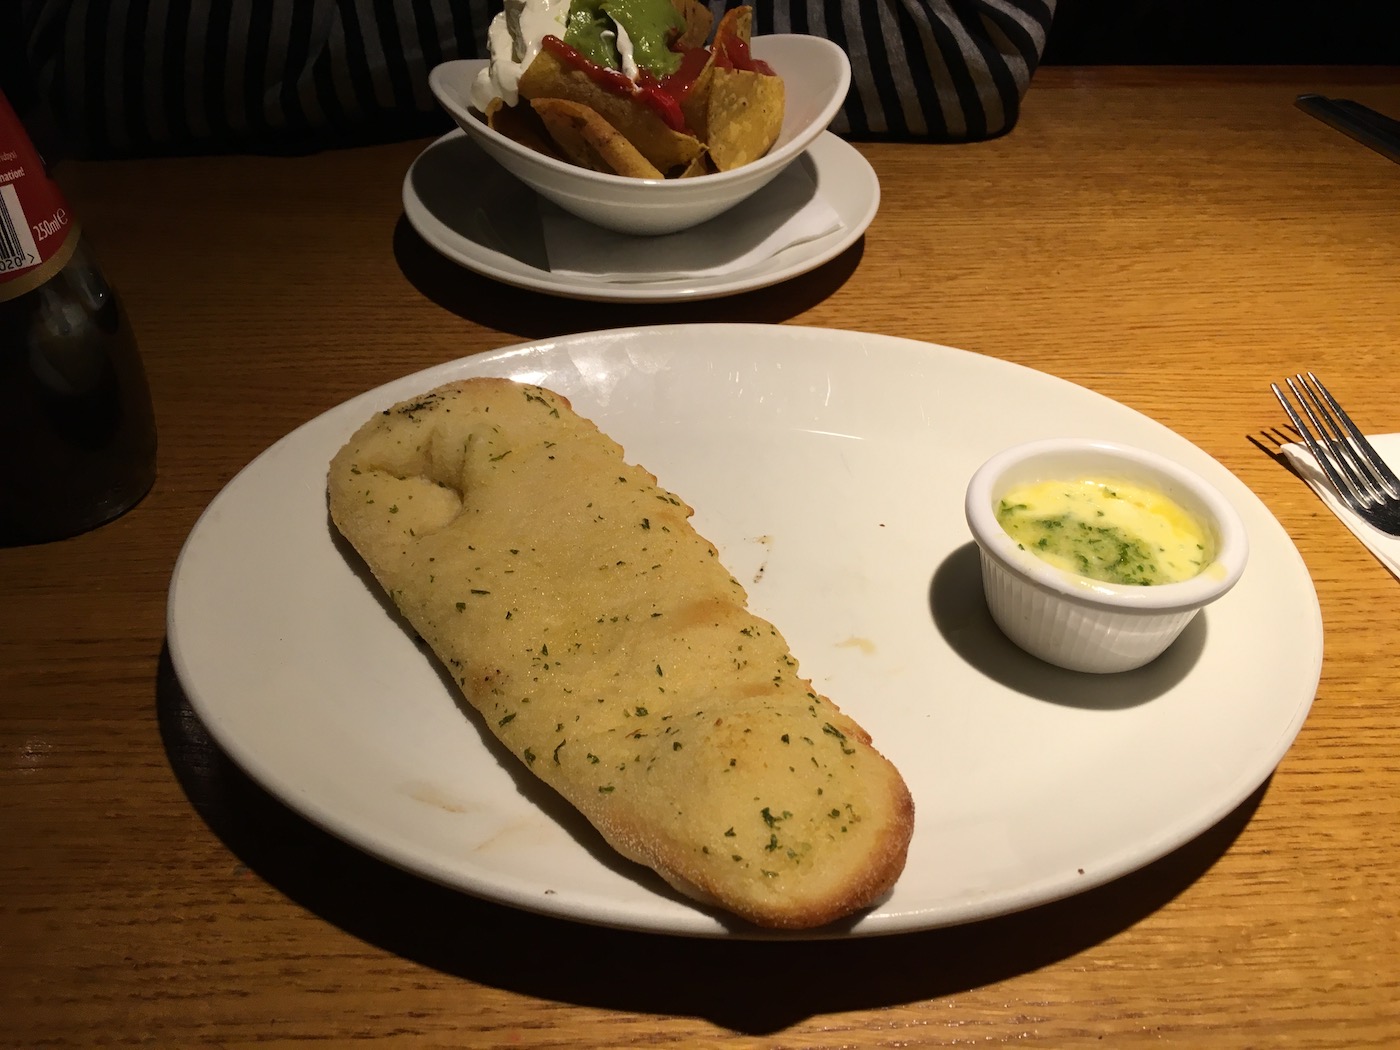 Garlic bread at a restaurant in london 2015